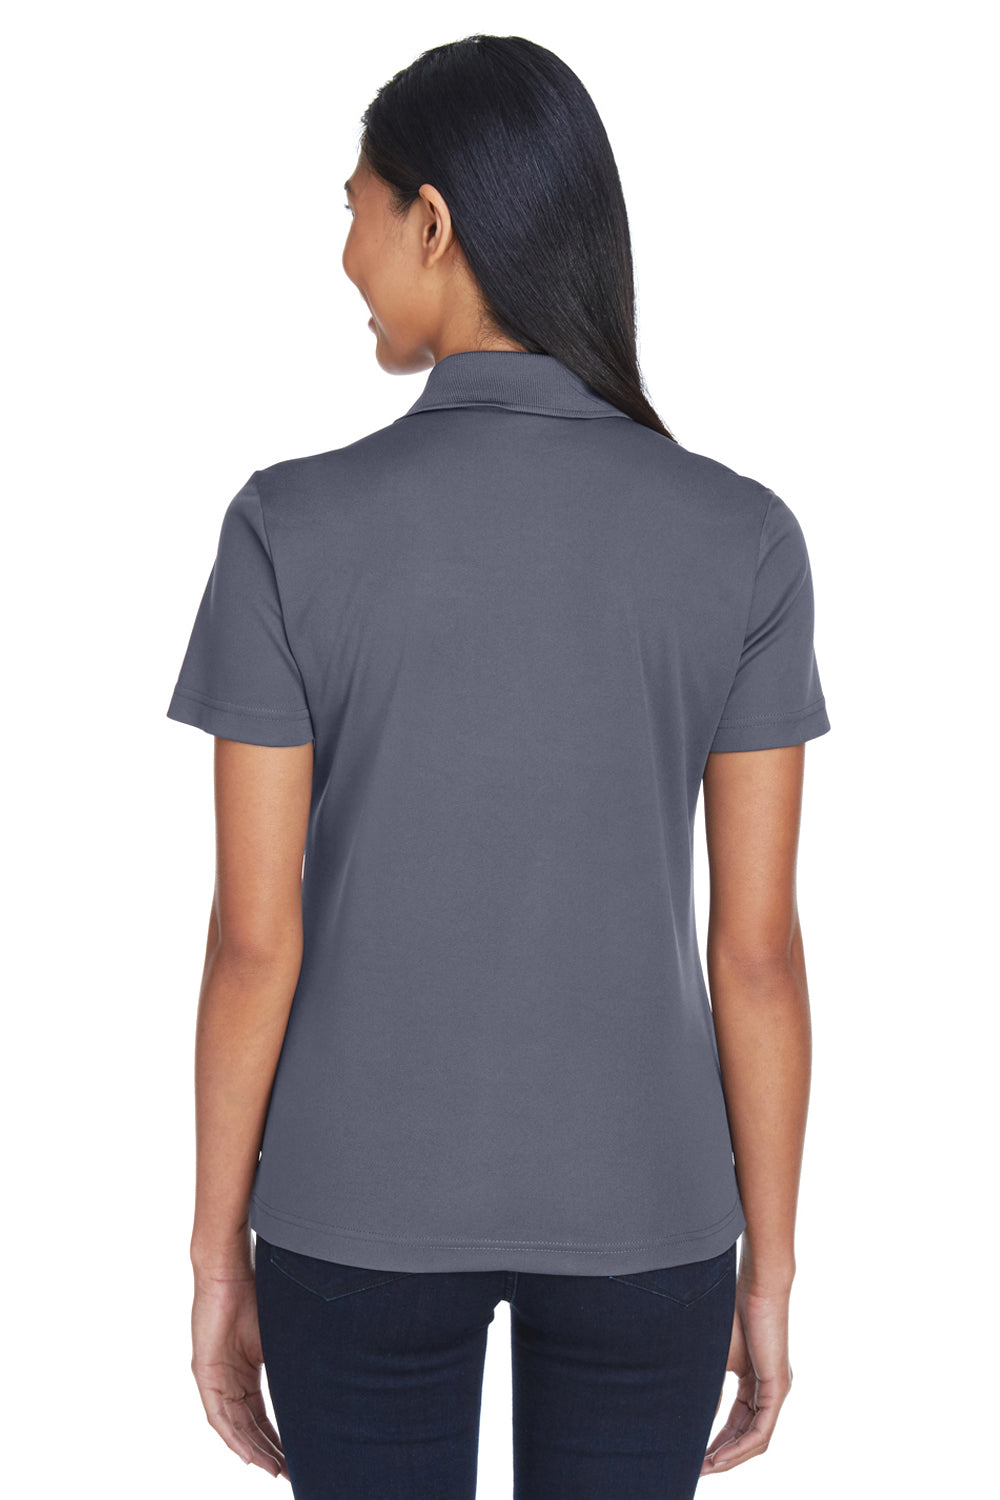 Core 365 CE101W Womens Balance Performance Moisture Wicking Short Sleeve Polo Shirt Navy Blue/Grey Back